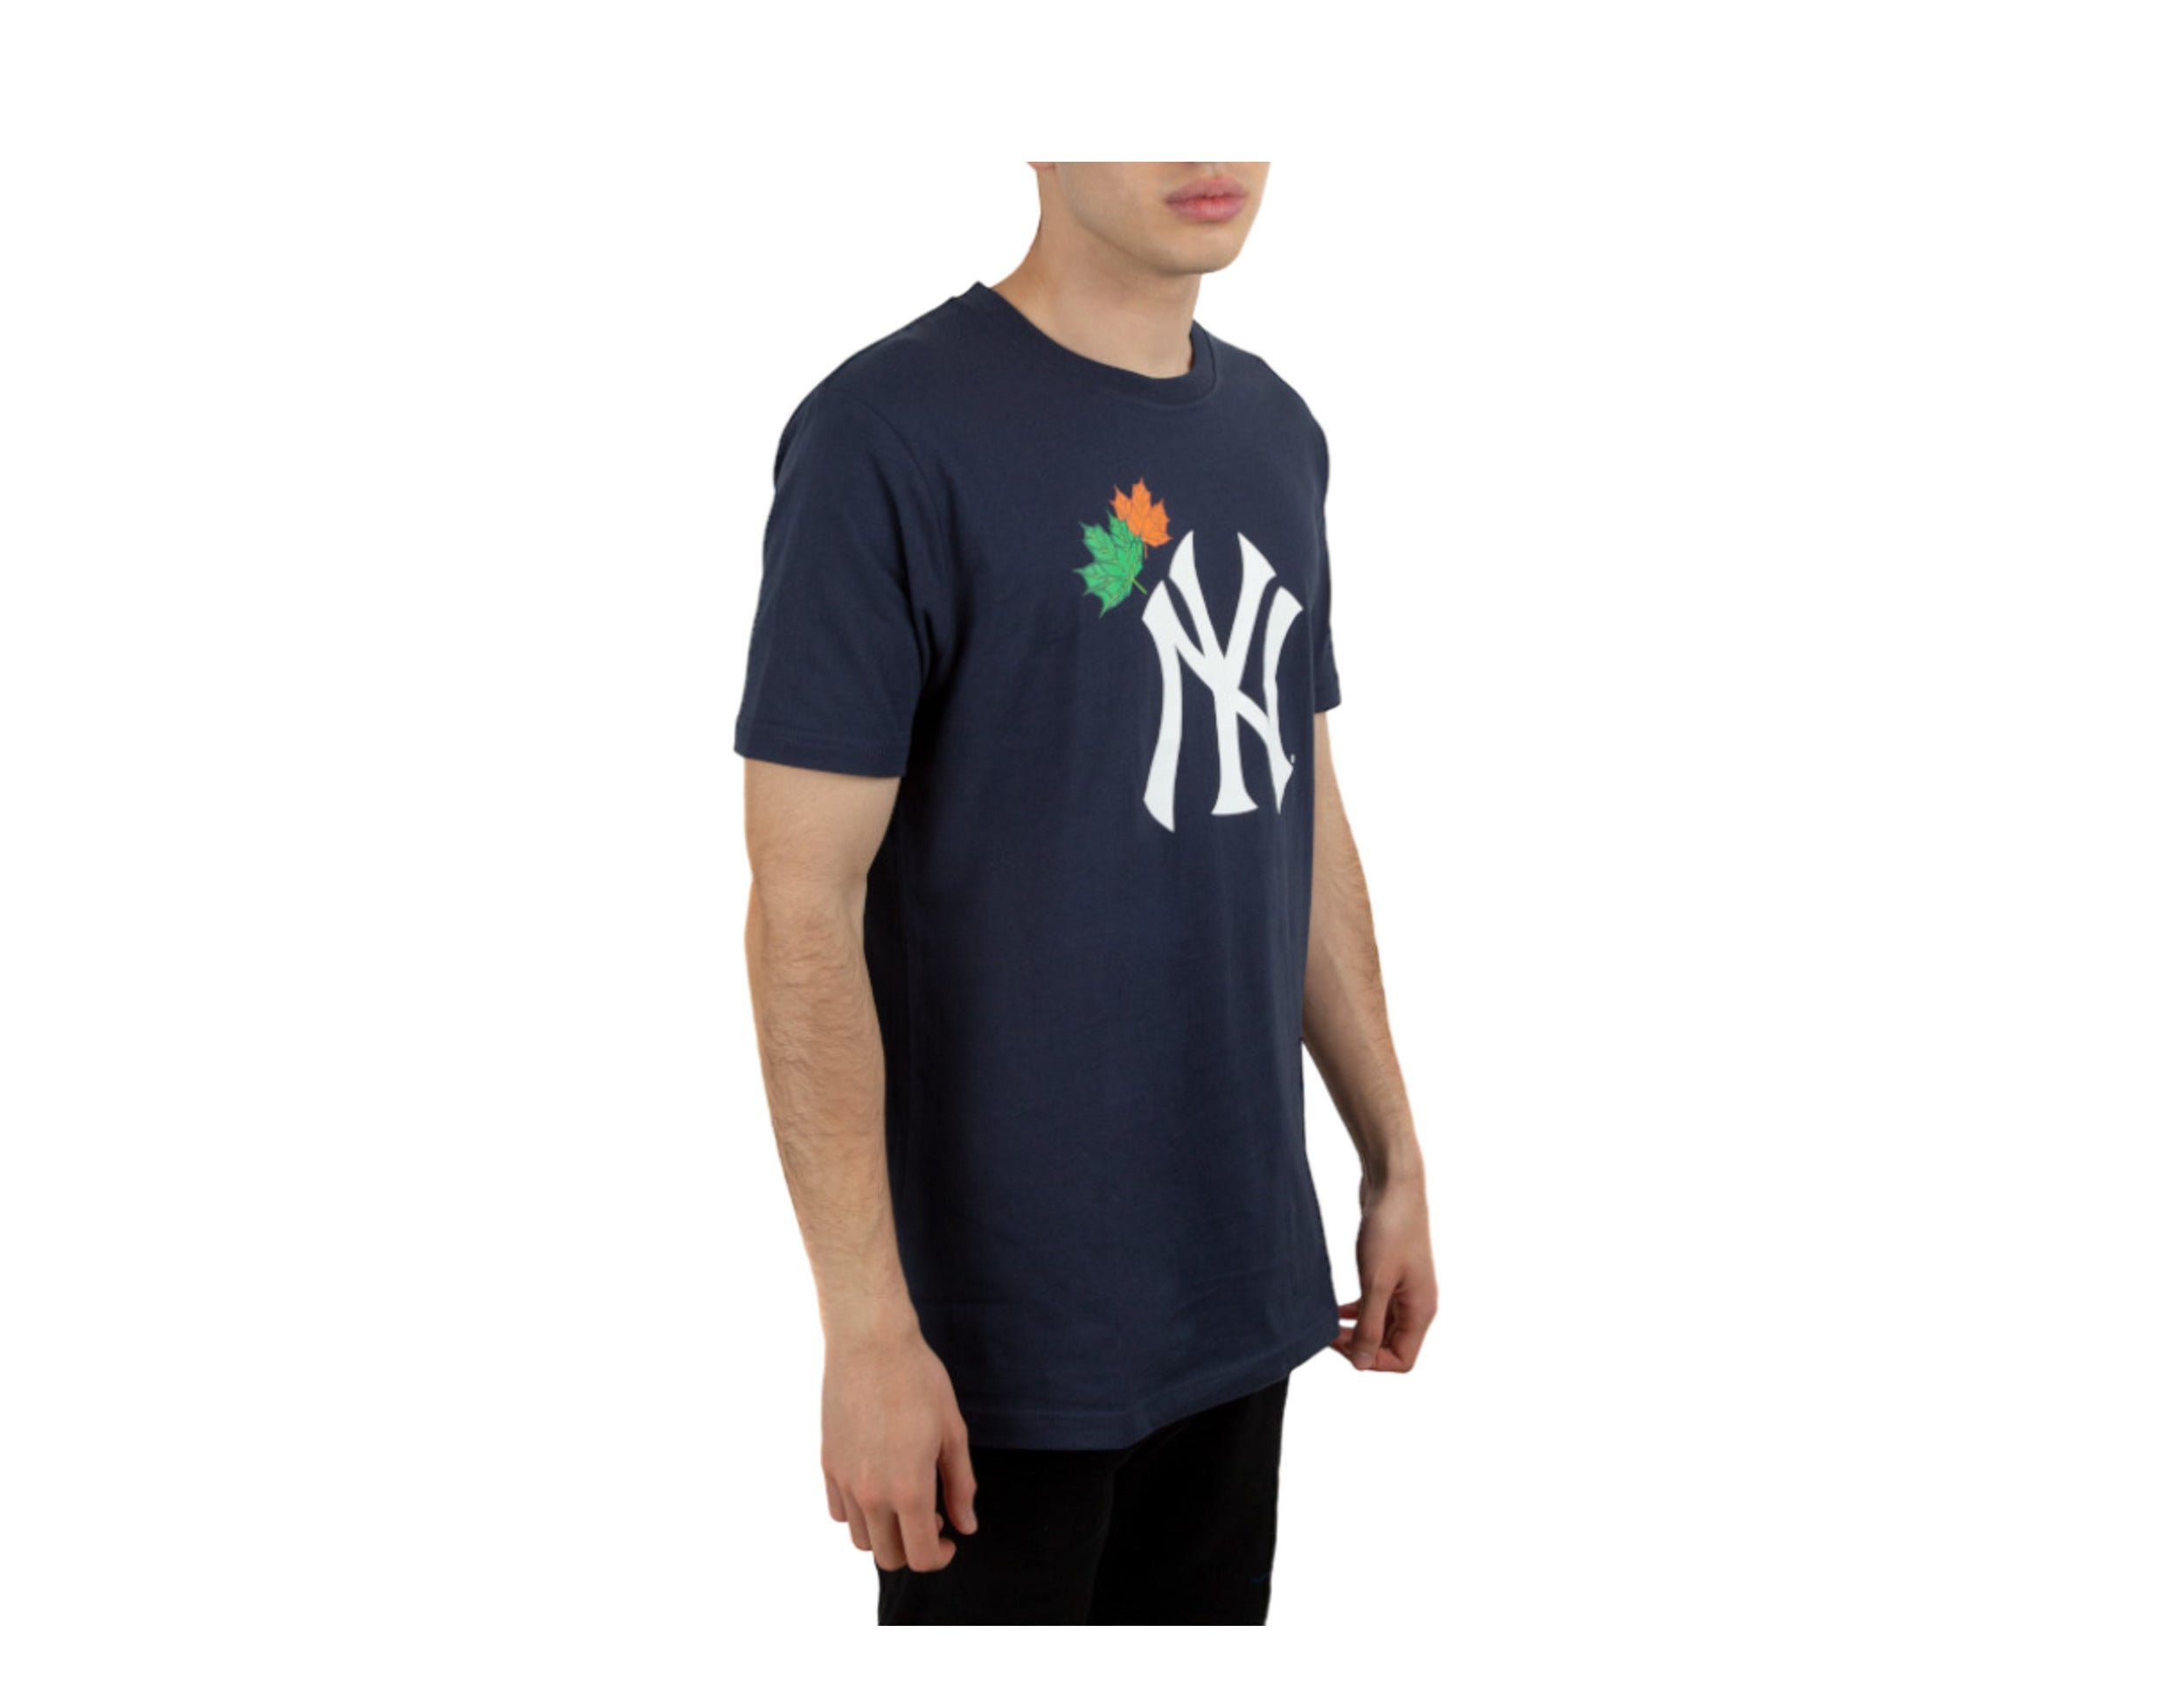 Men's Pro Standard Gray New York Yankees Team T-Shirt Size: Small